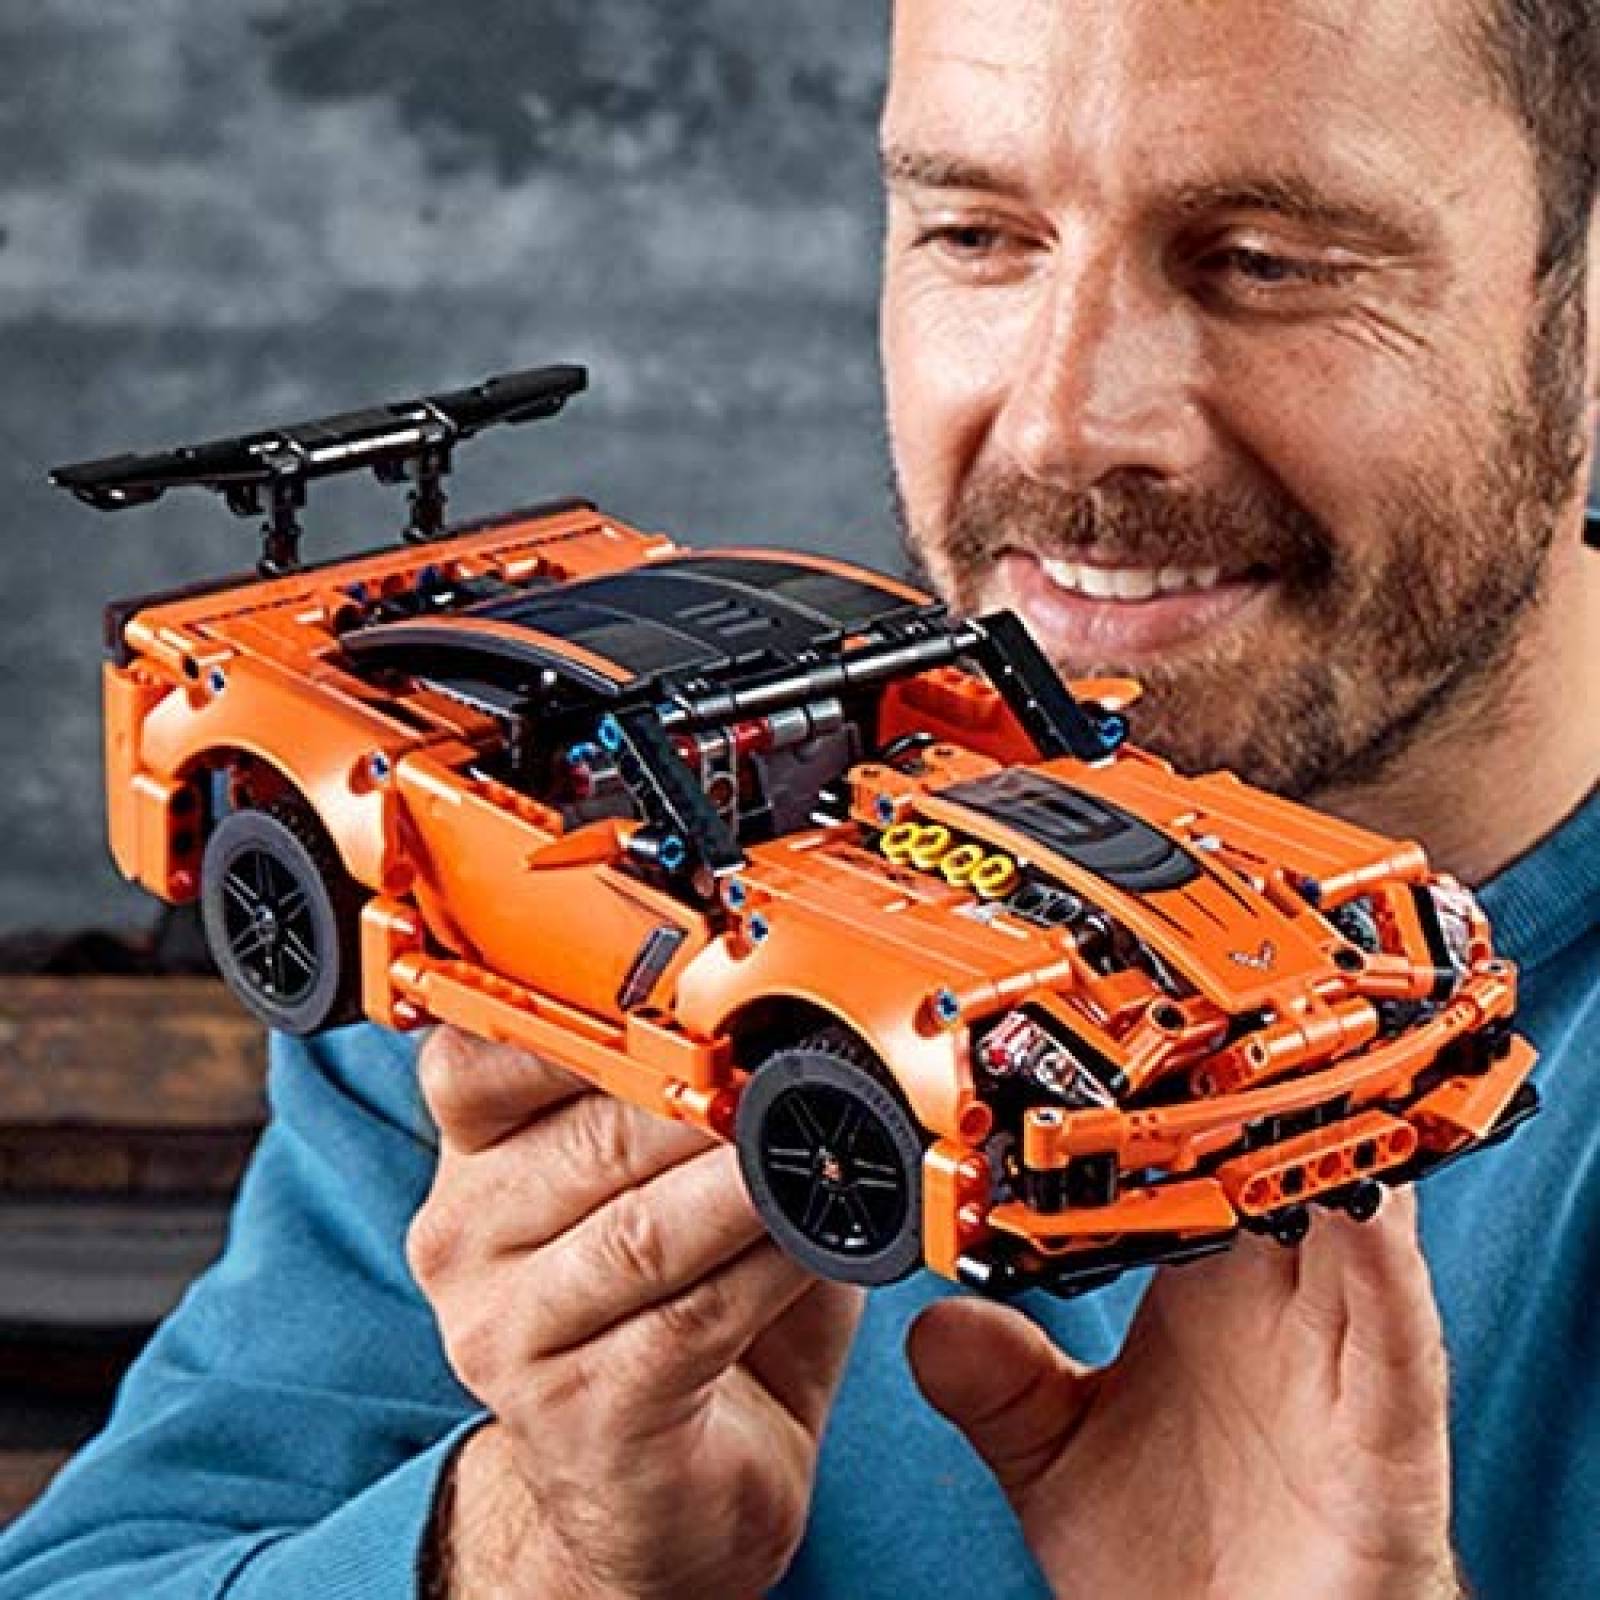 Set de Construcción LEGO Technic Chevrolet Corvette 579 Pzs